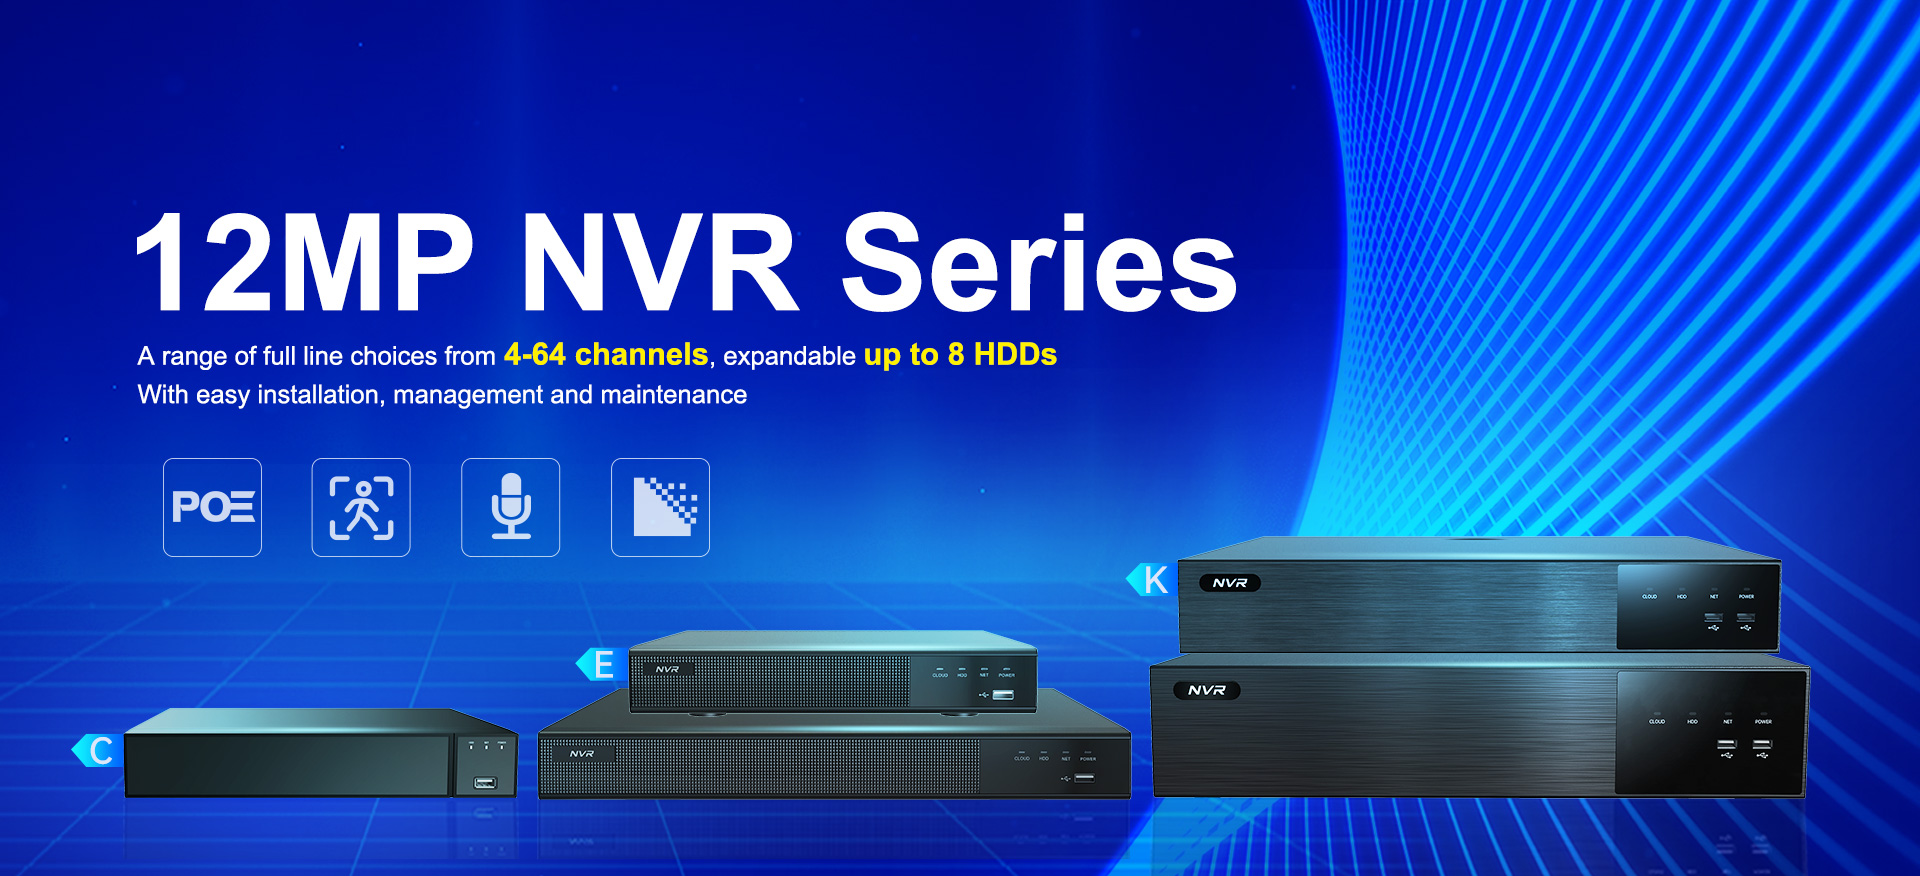 NVR Series